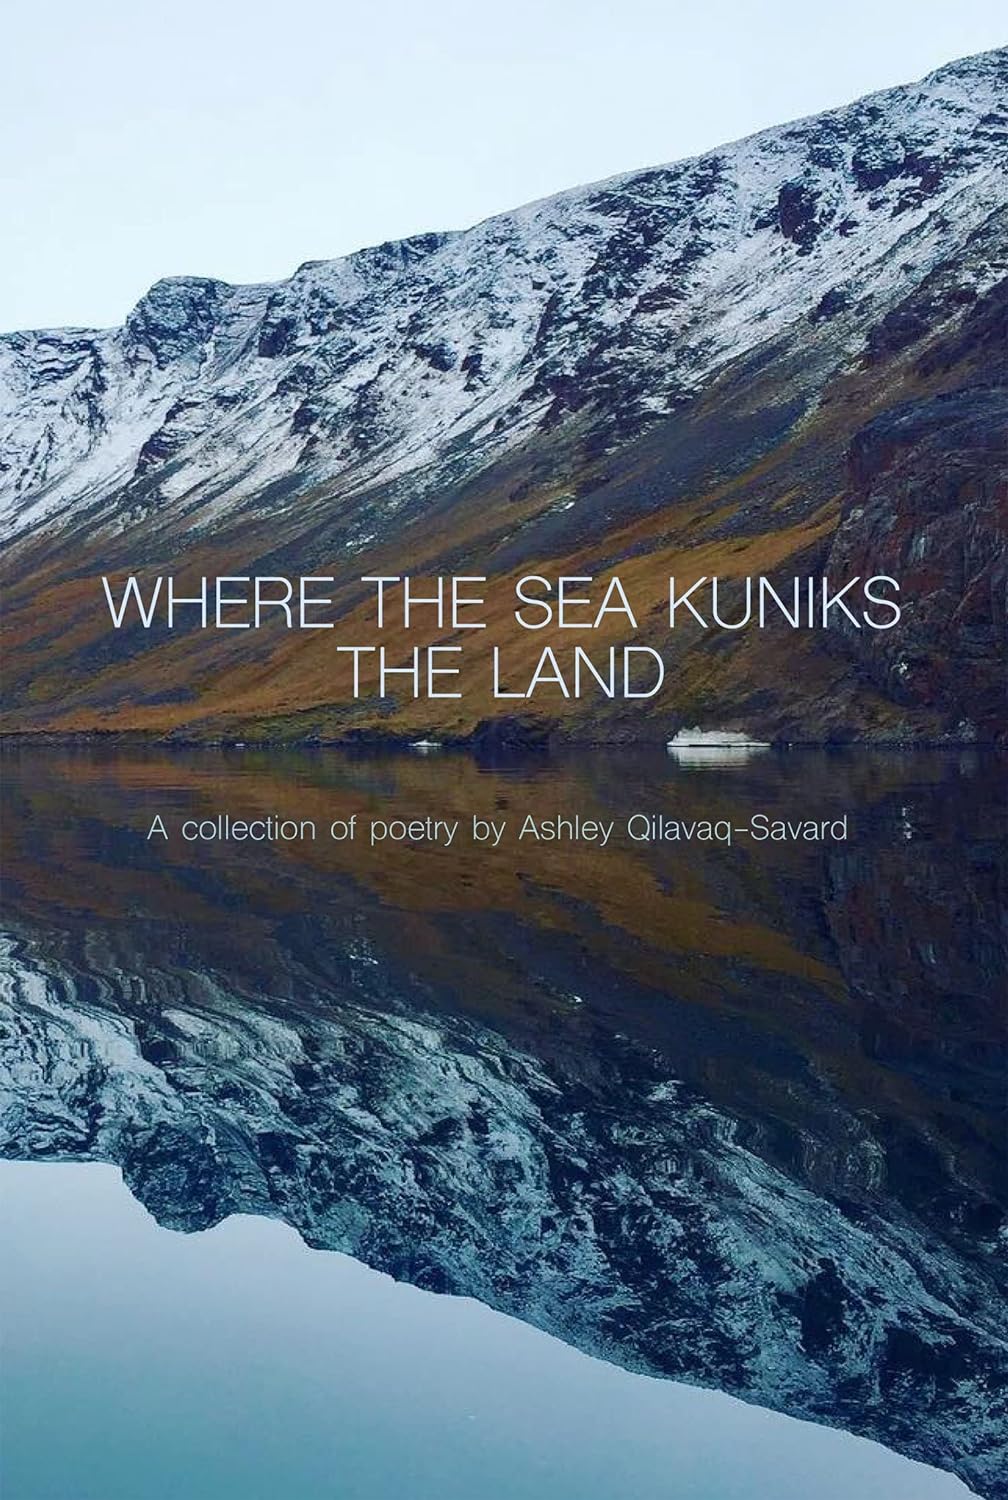 Where the Sea Kuniks the Land by Ashley Qilavaq-Savard